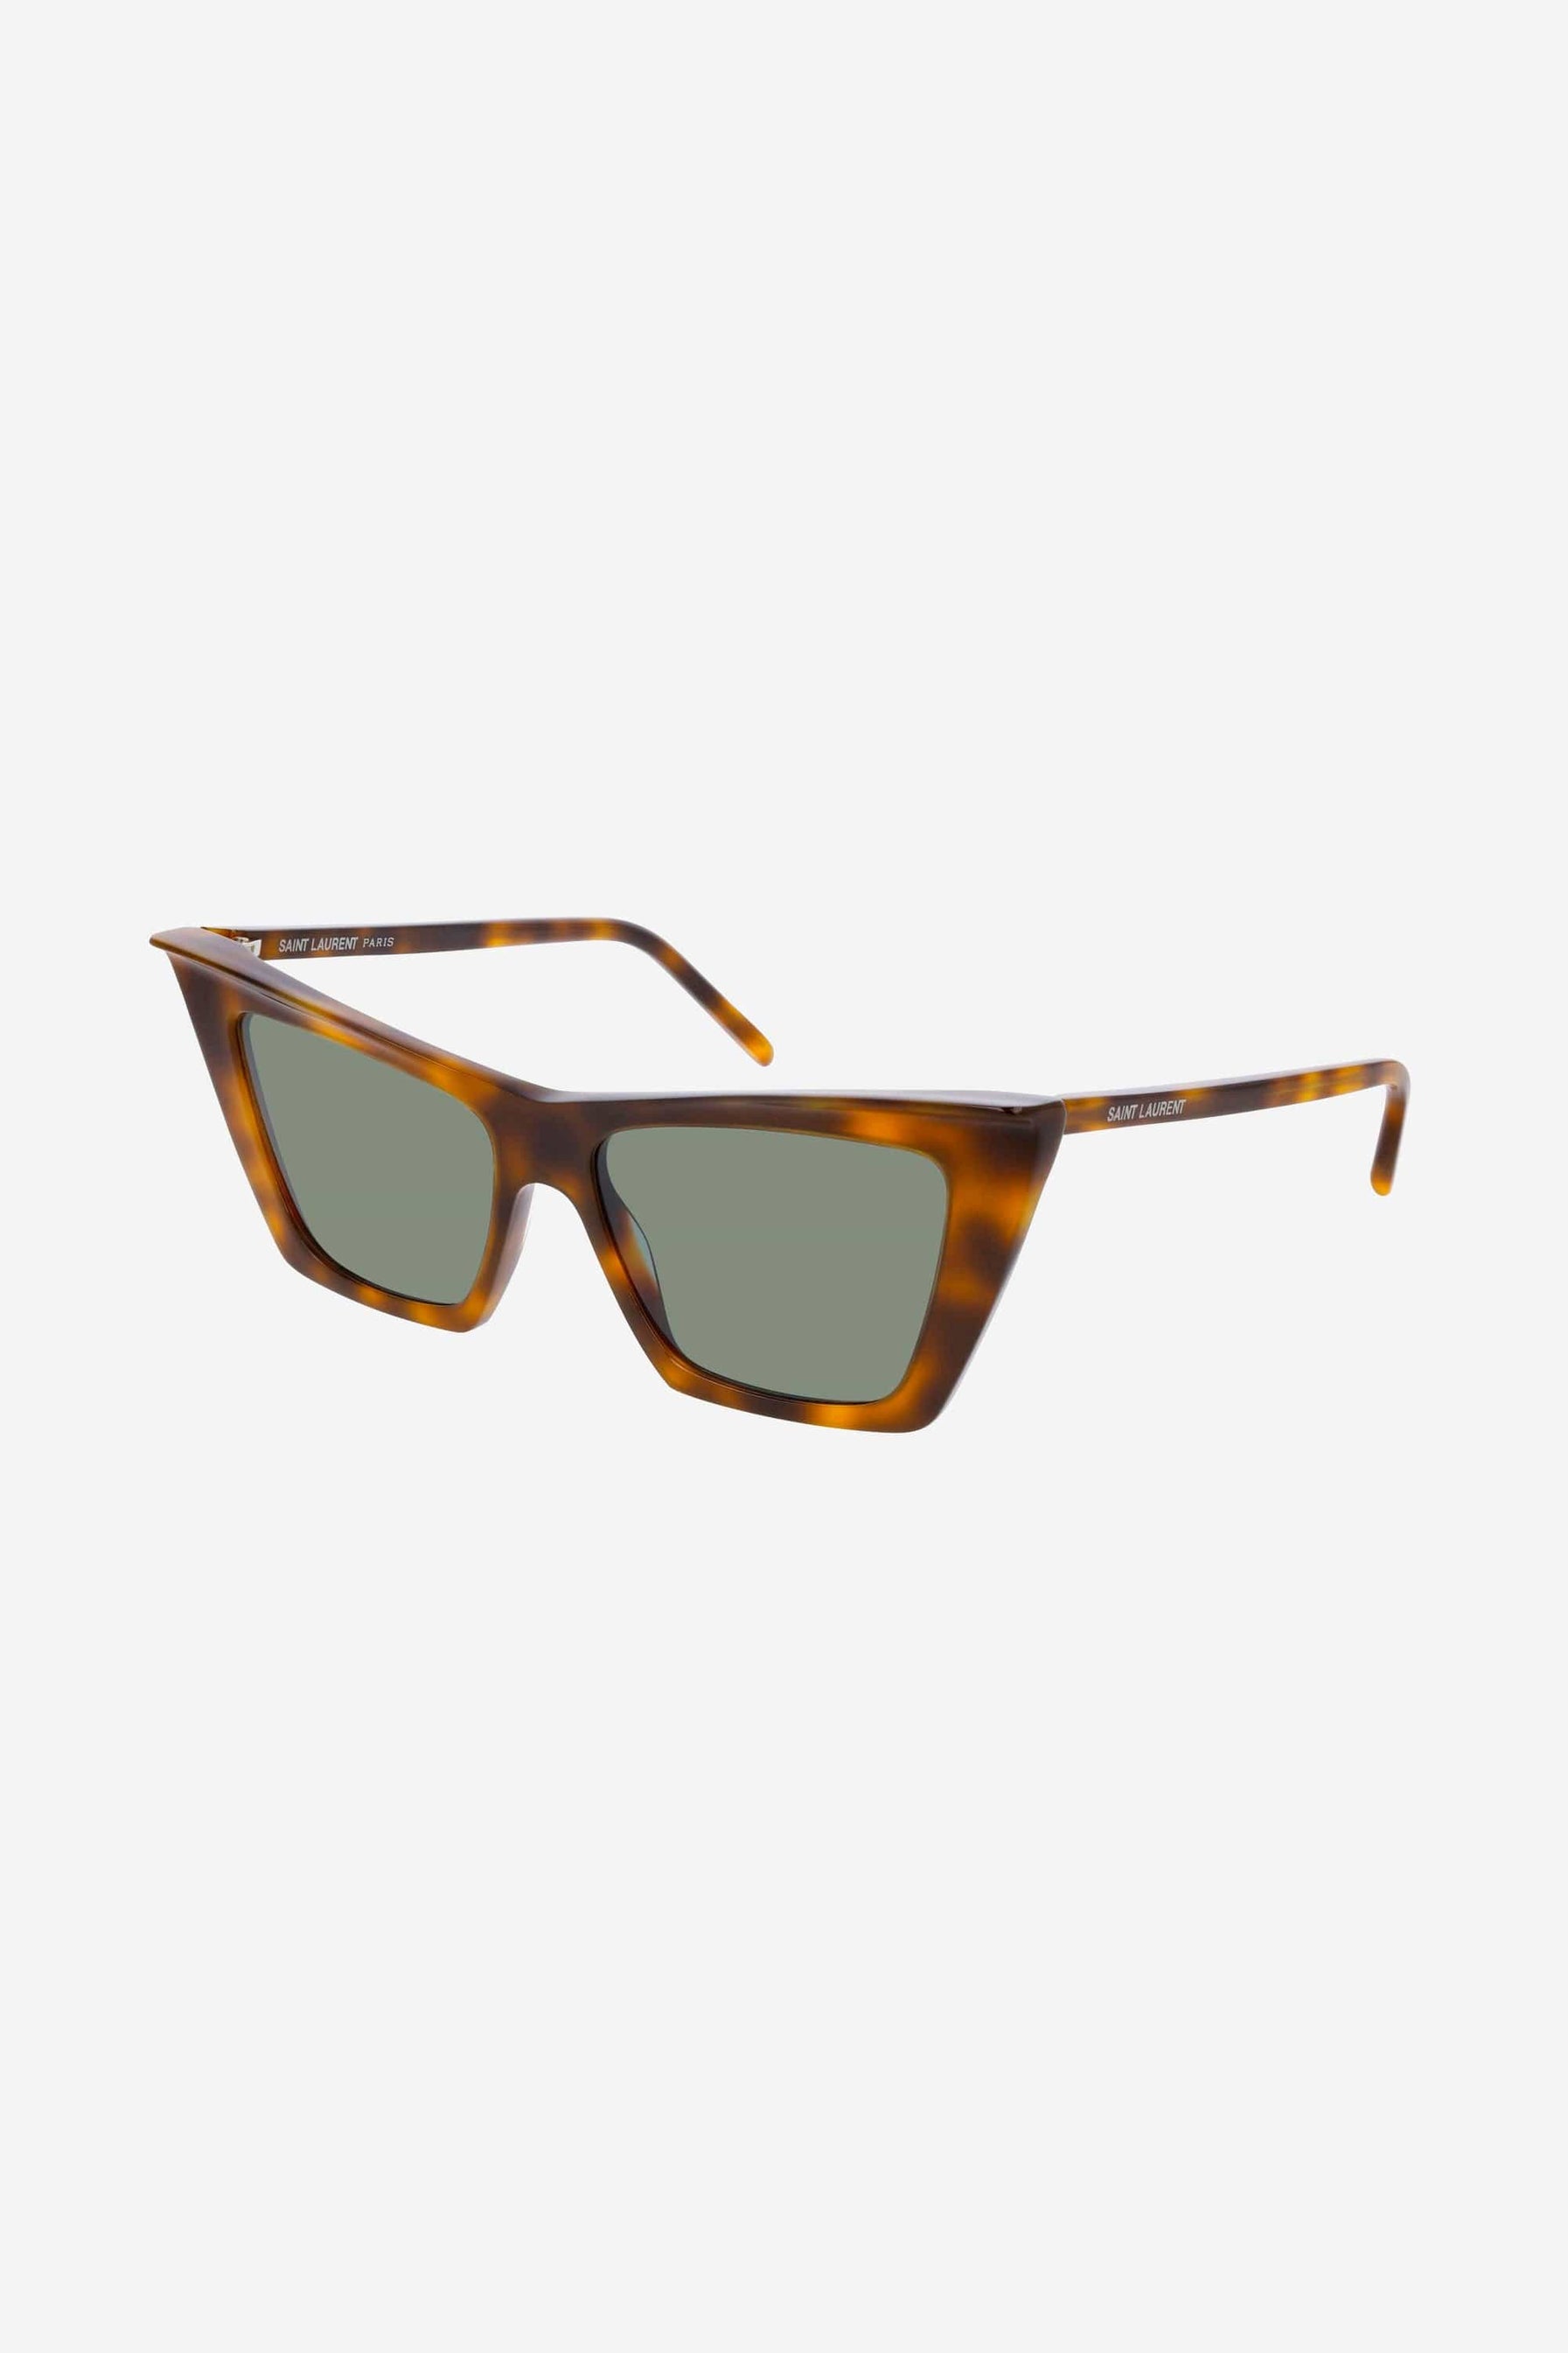 Saint Laurent iconic sharp cat-eye havana sunglasses - Eyewear Club